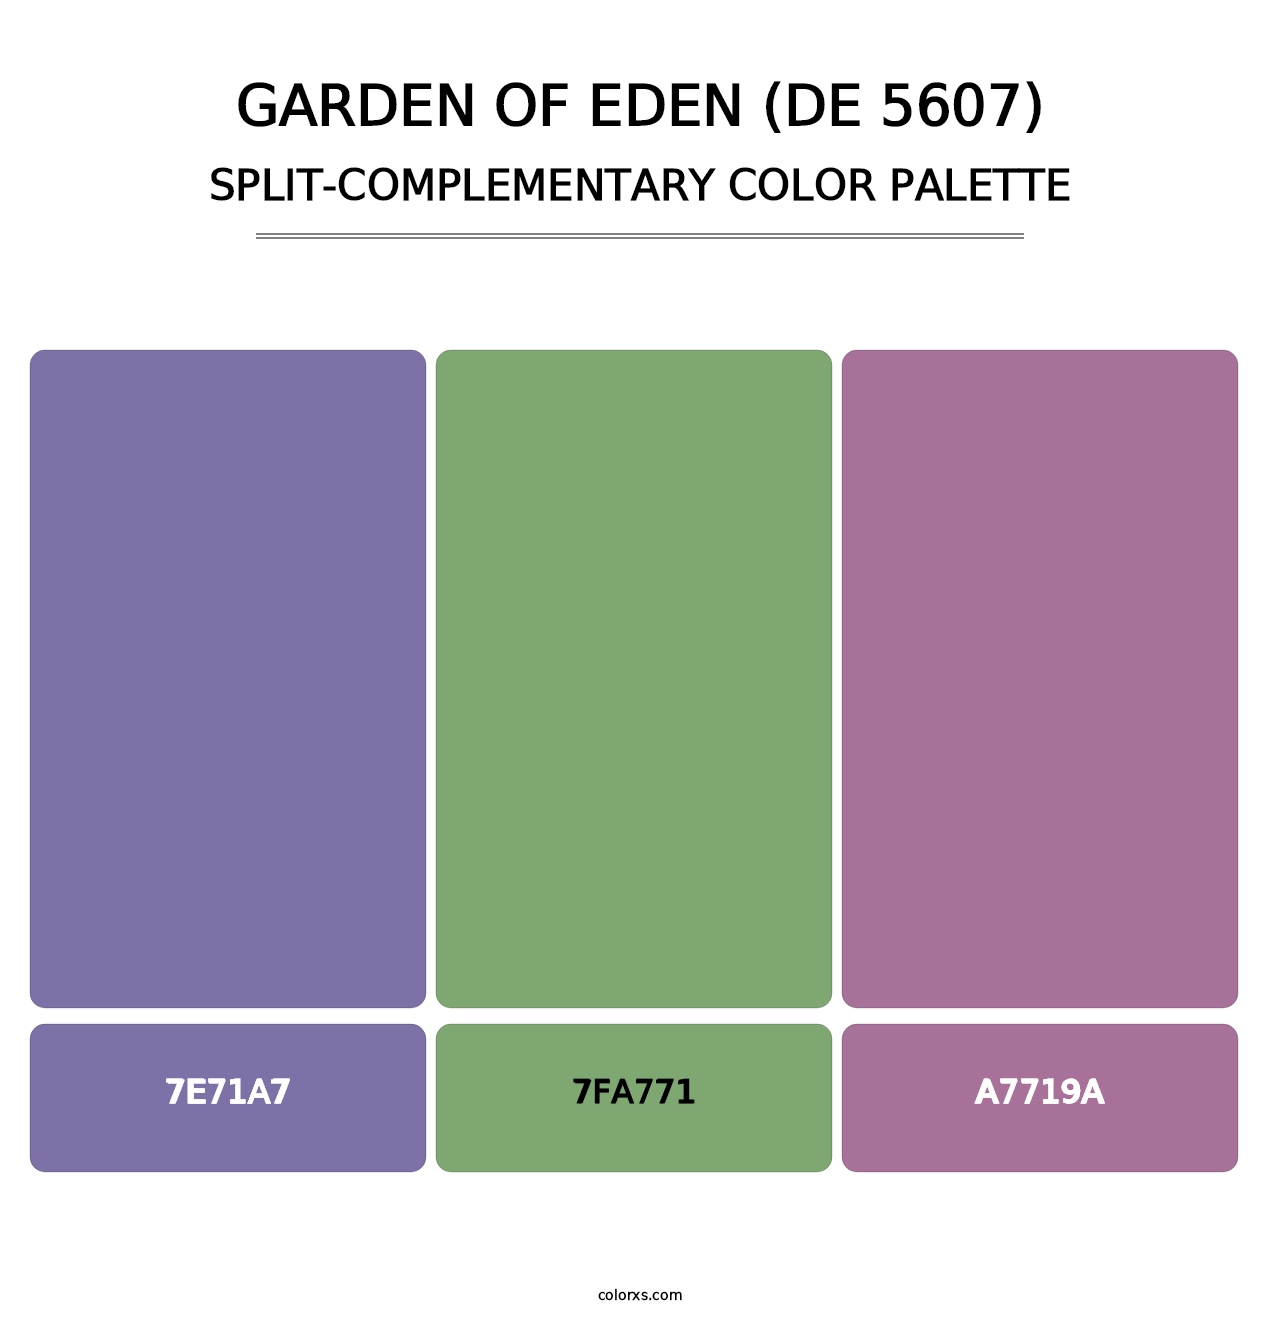 Garden of Eden (DE 5607) - Split-Complementary Color Palette